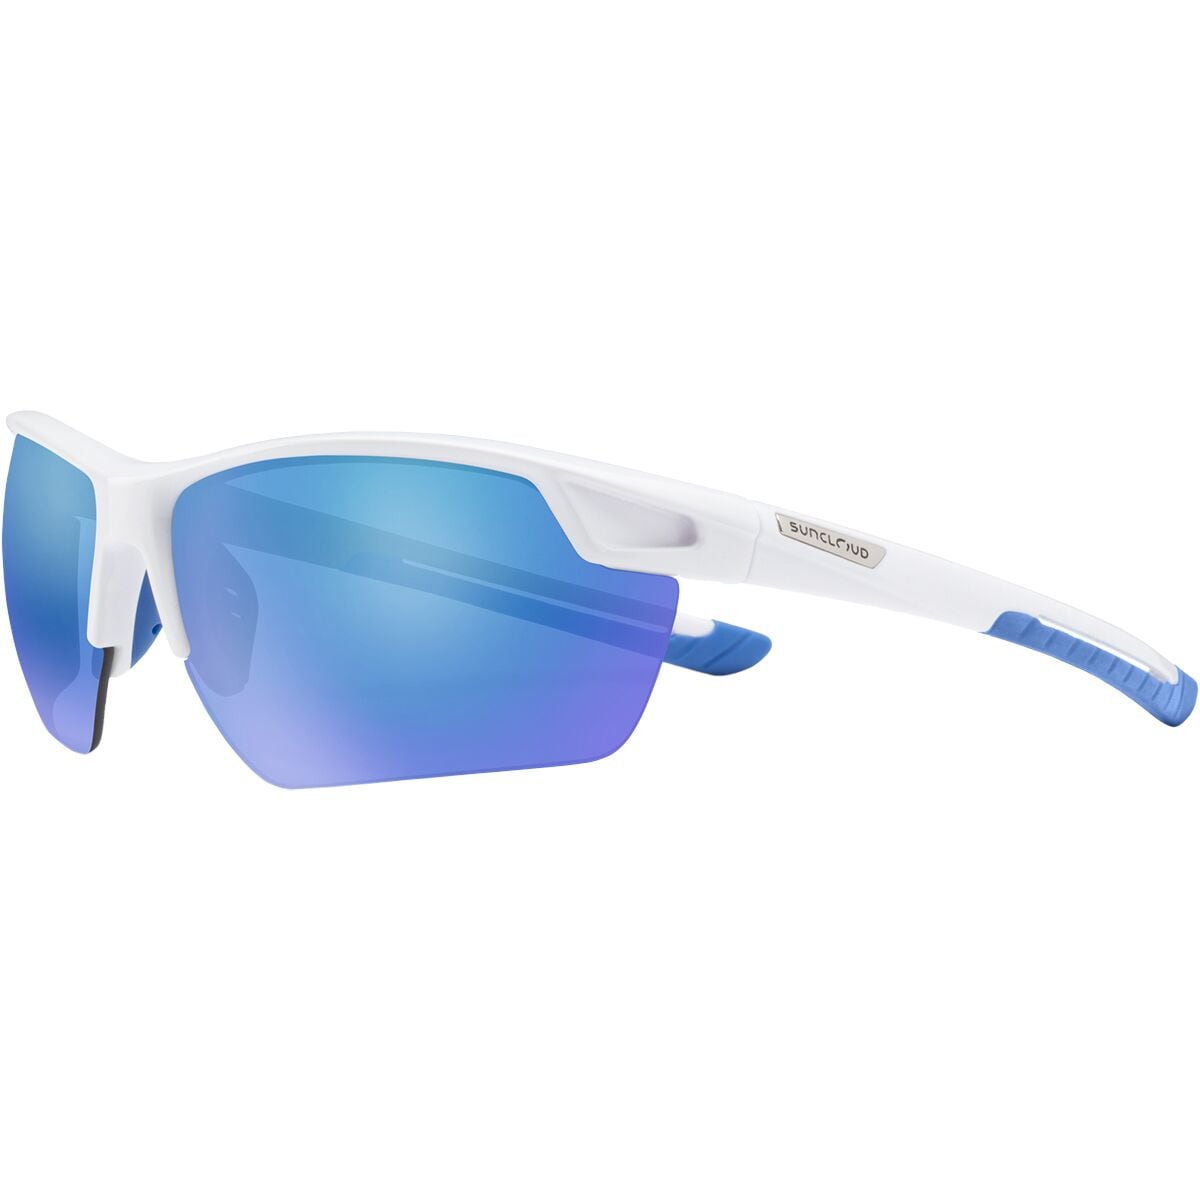 Поляризованные солнцезащитные очки contender Suncloud Polarized Optics, цвет white/polar blue2 mirror очки солнцезащитные stylemark polarized l1475a